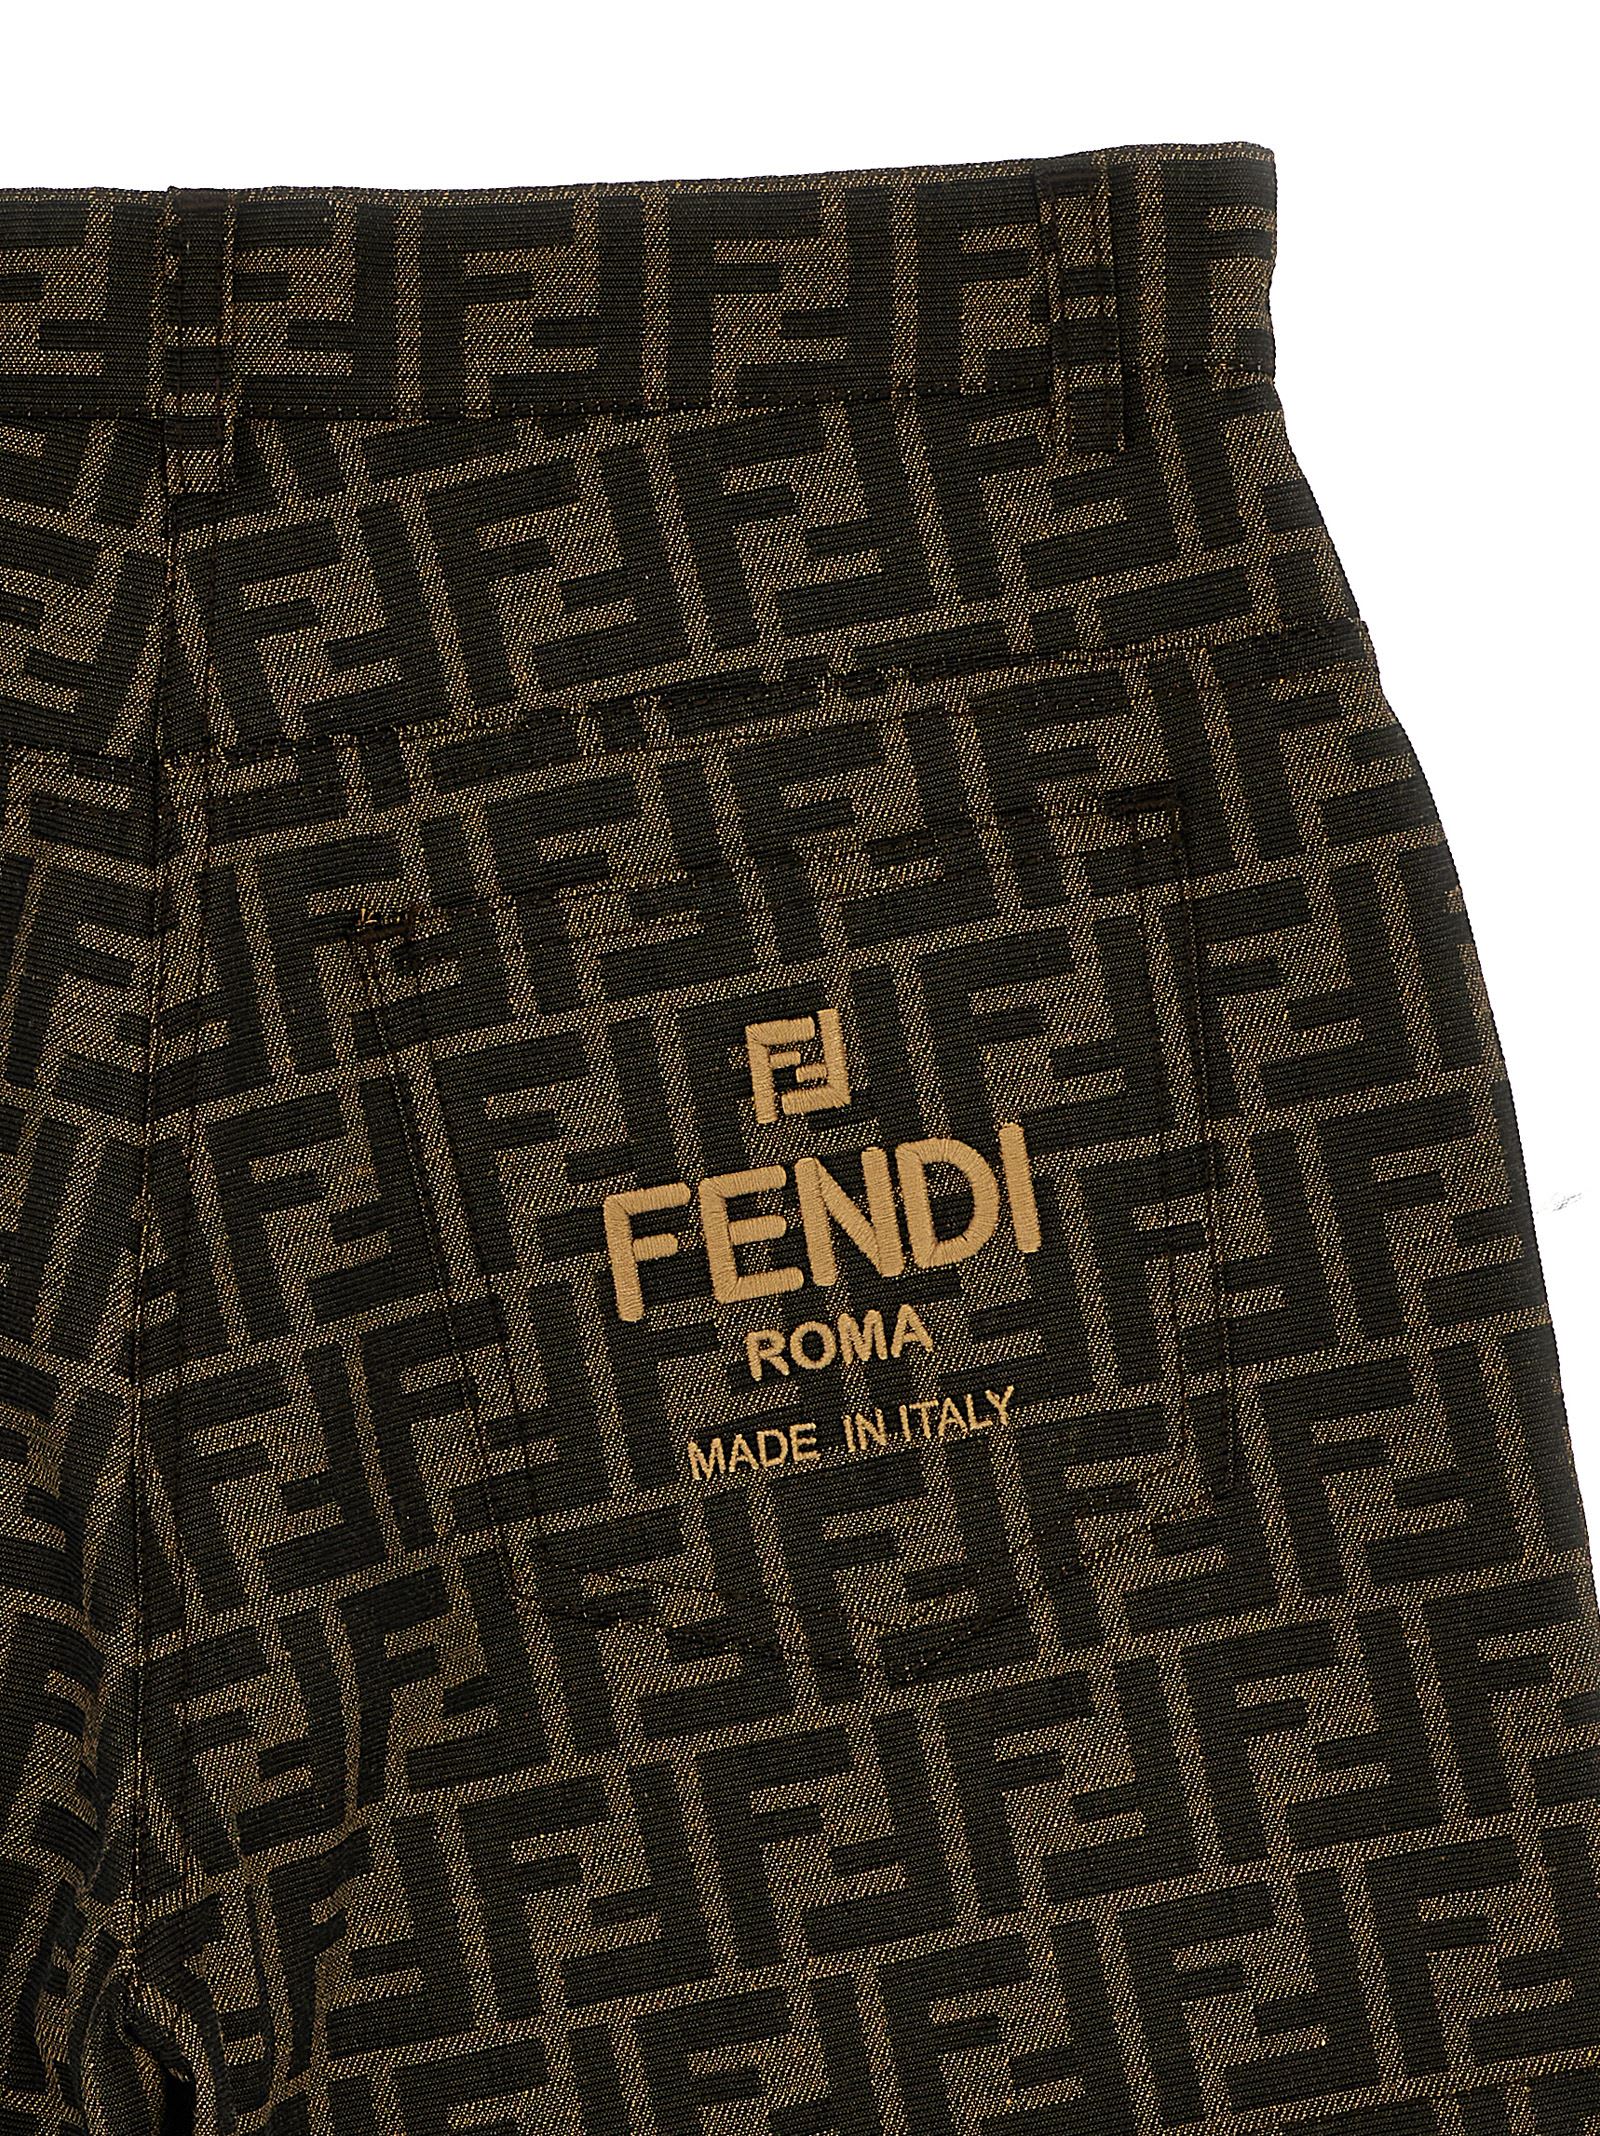 Shop Fendi Ff Shorts